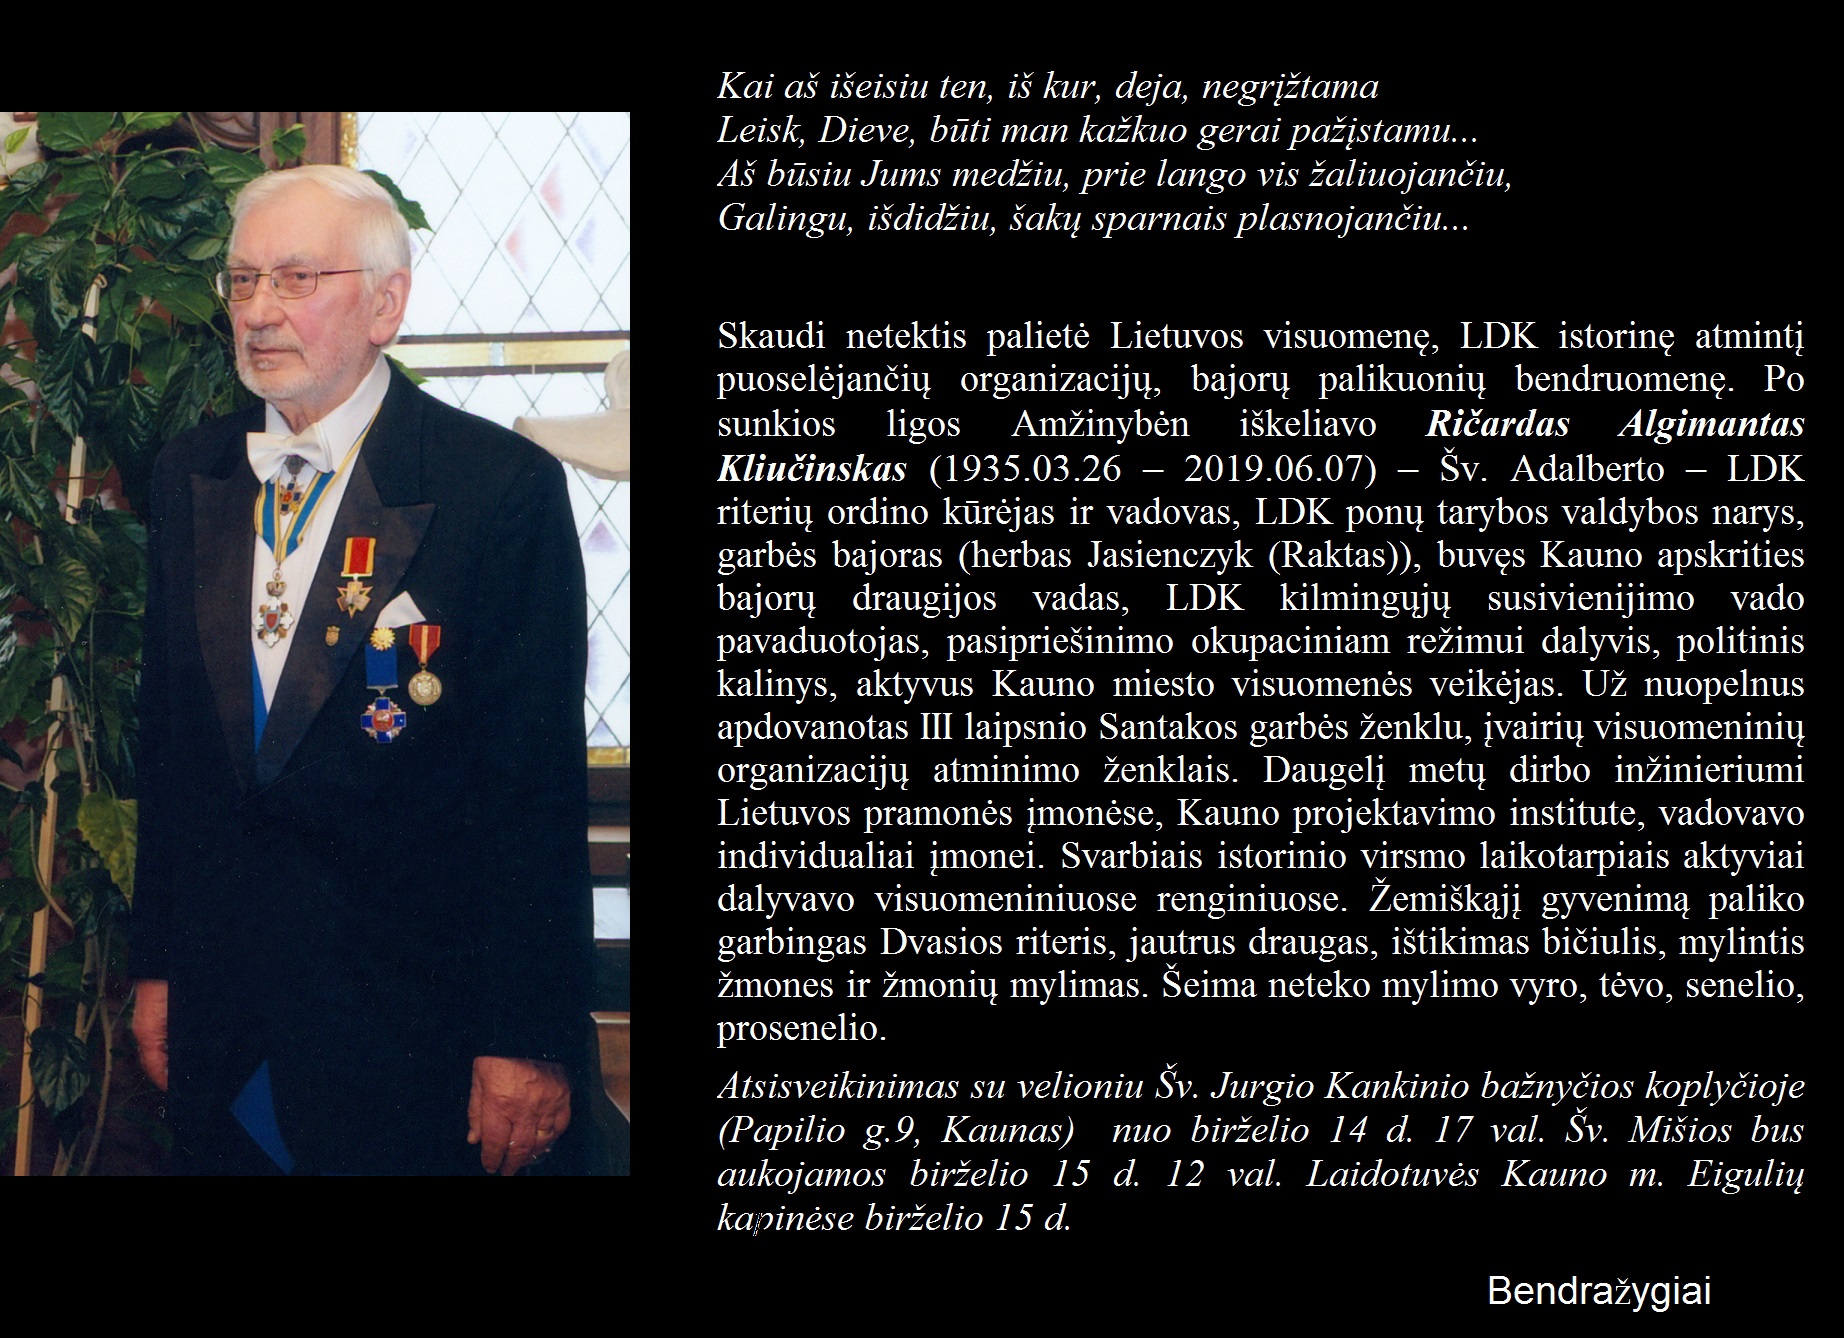 In memoriam. Ričardas Algimantas Kliučinskas (1935-2019)